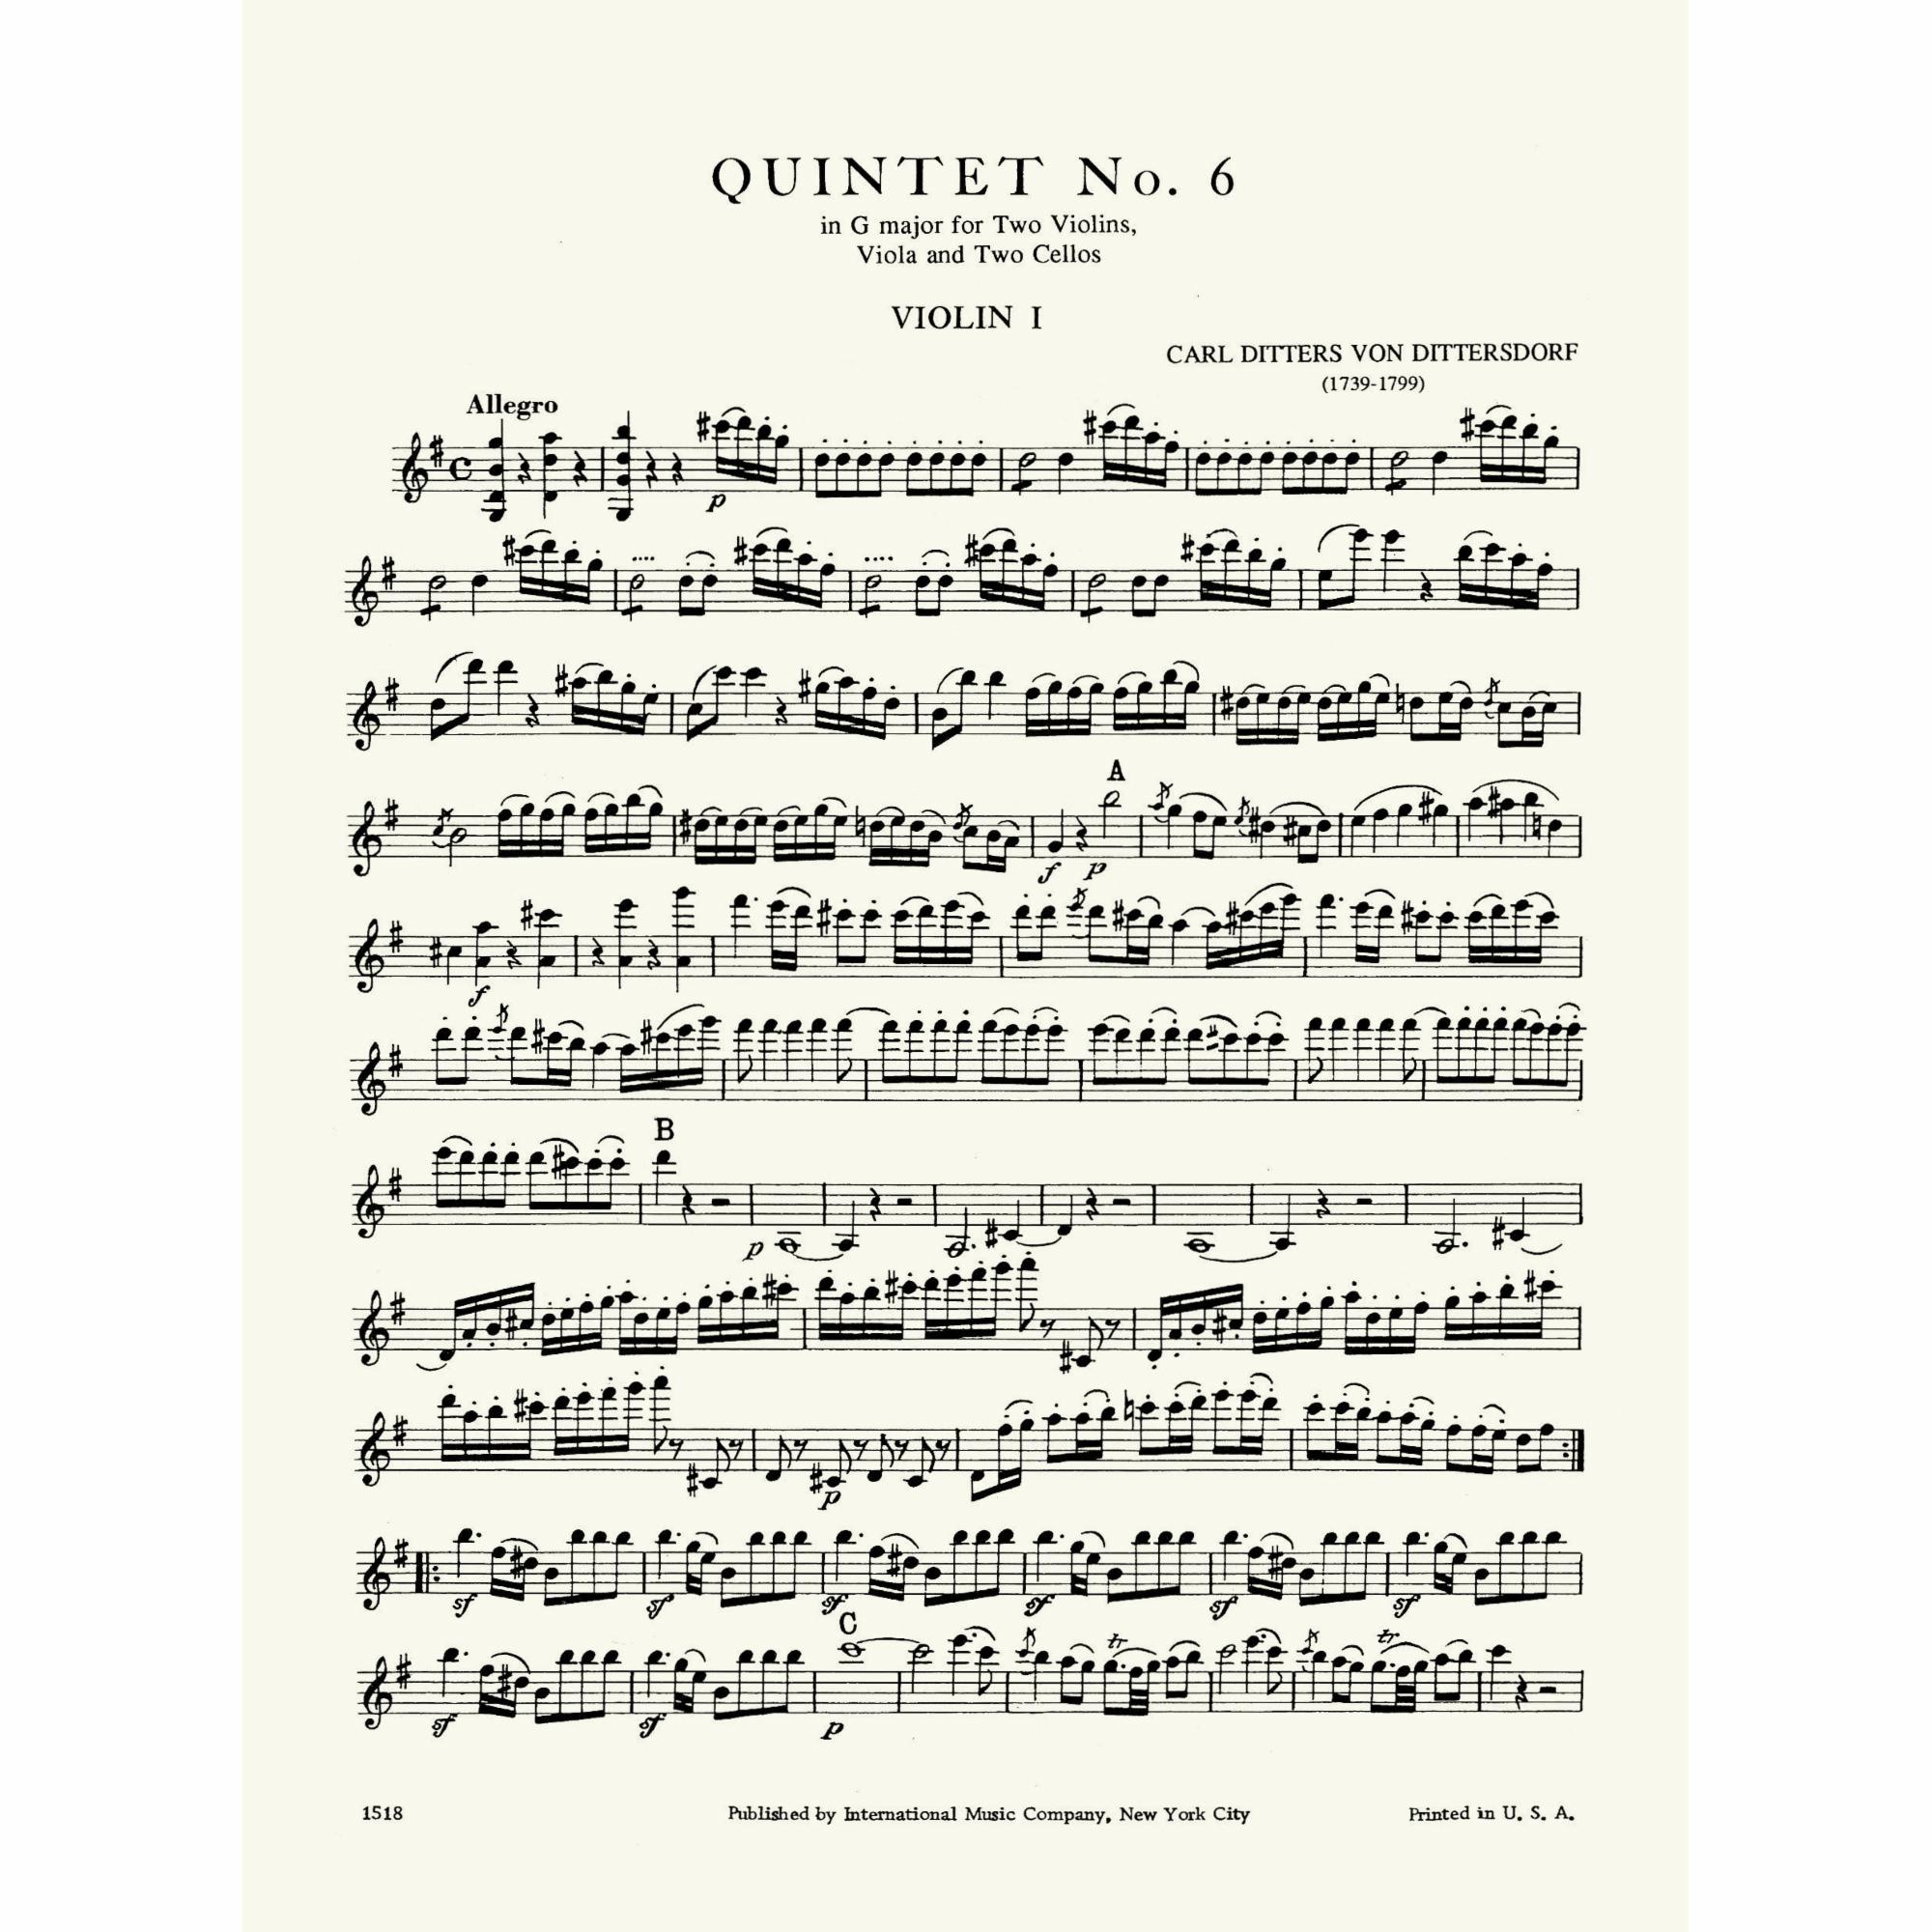 Dittersdorf -- String Quintet No. 6 in G Major | Southwest Strings